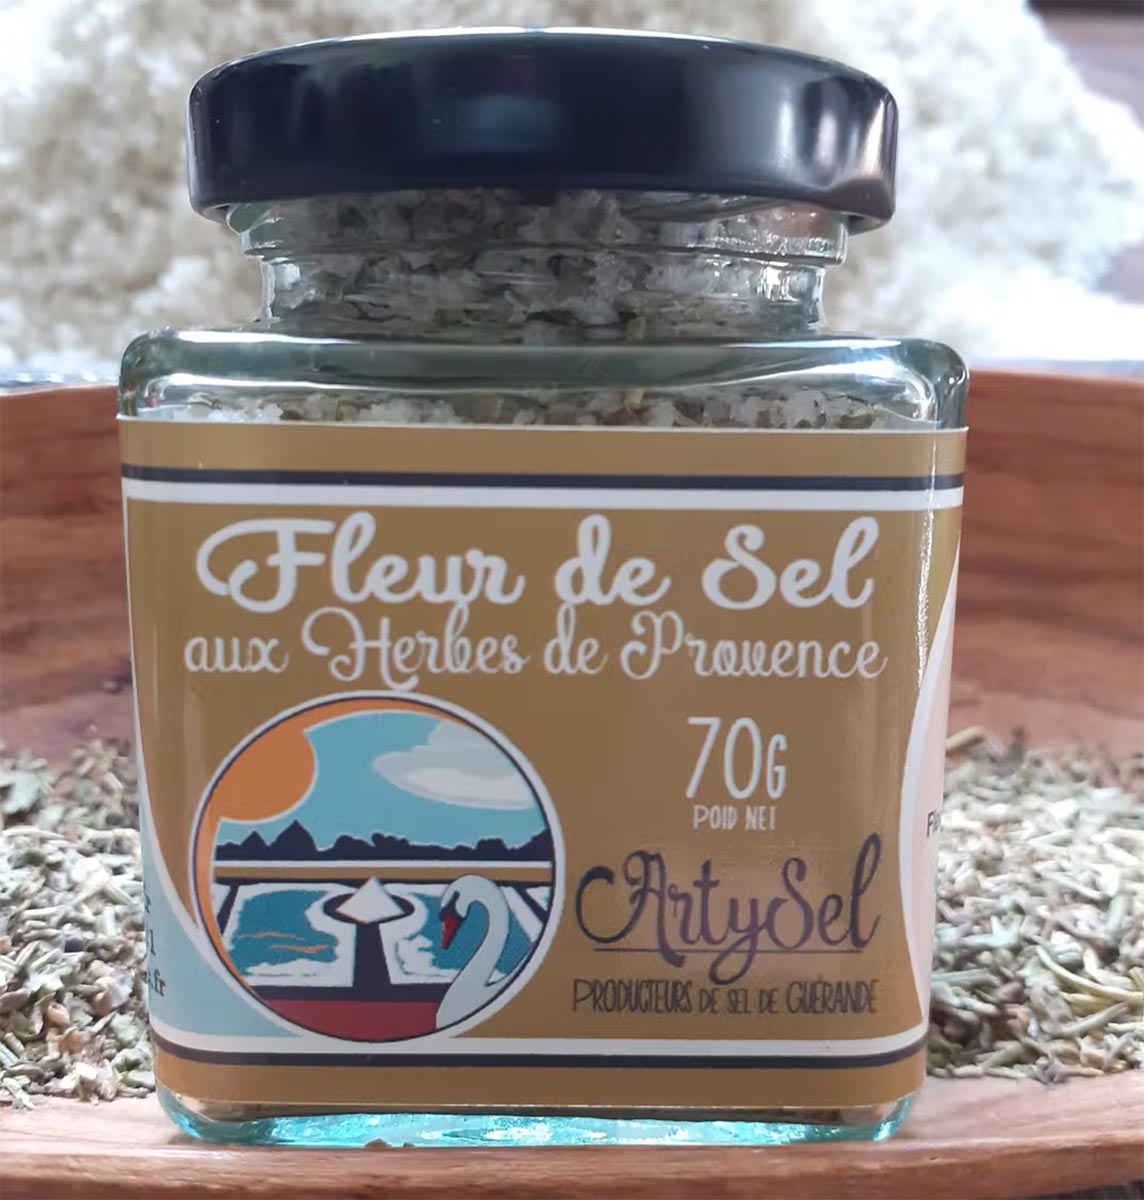 Fleur de sel de Guérande mit Kräutern der Provence